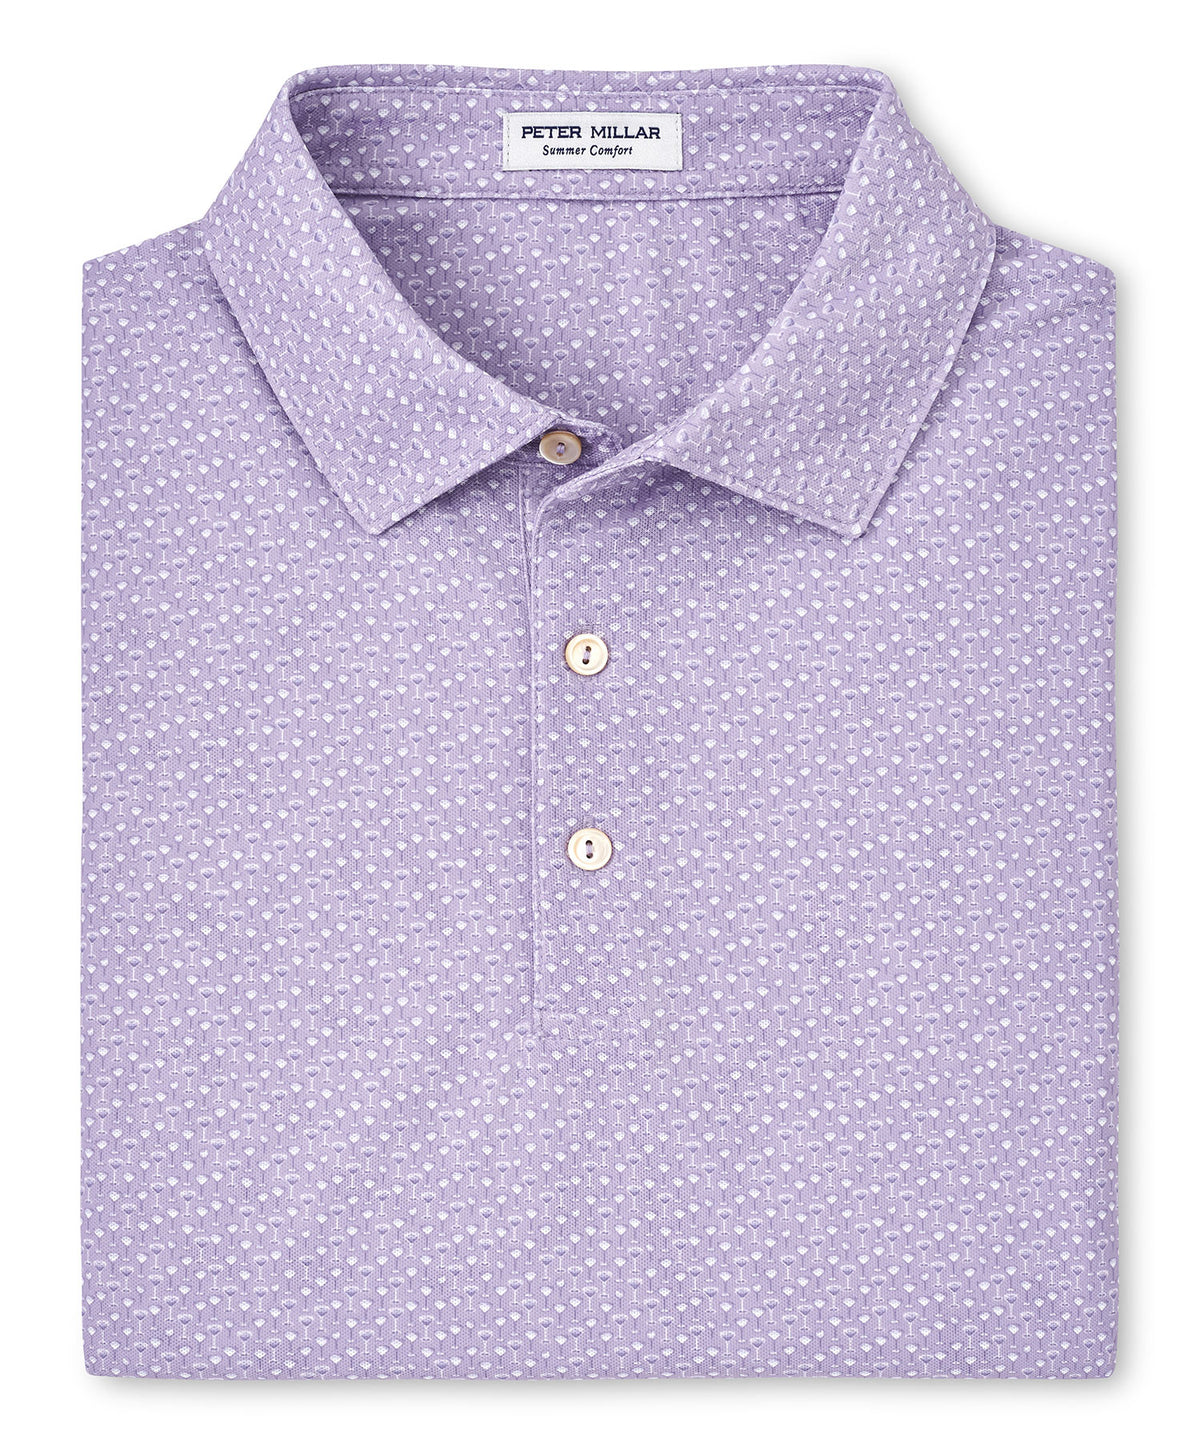 Peter Millar Short Sleeve Tee It High Print Polo Knit Shirt, Big & Tall